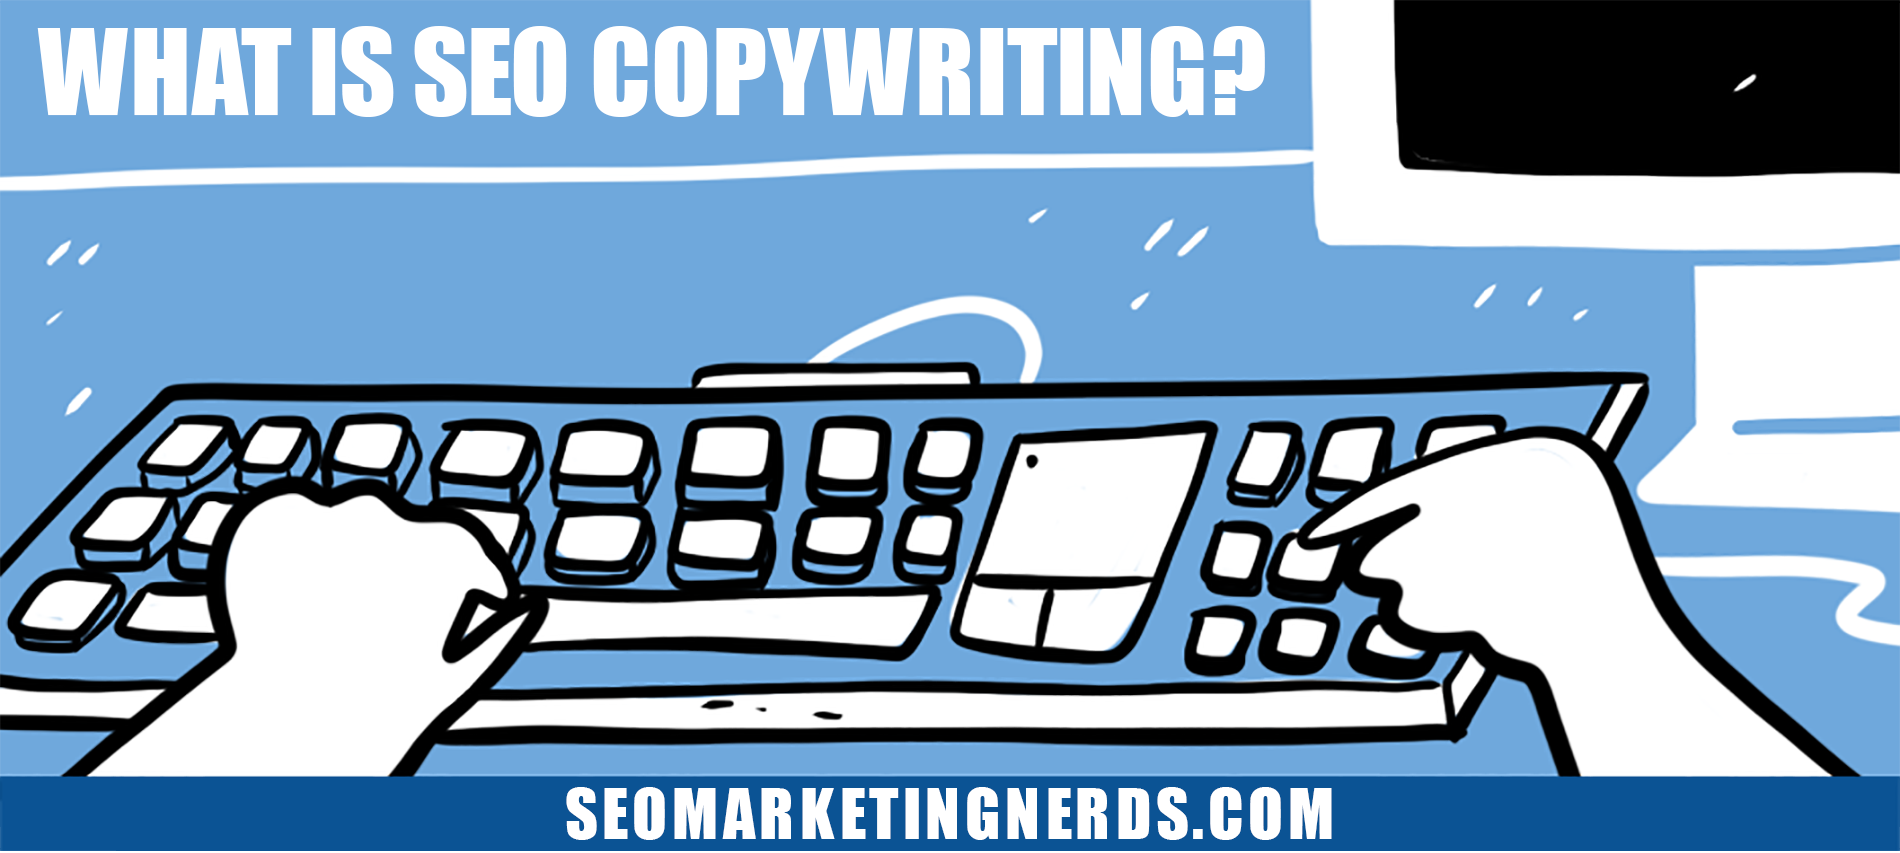 What Is SEO Copywriting?